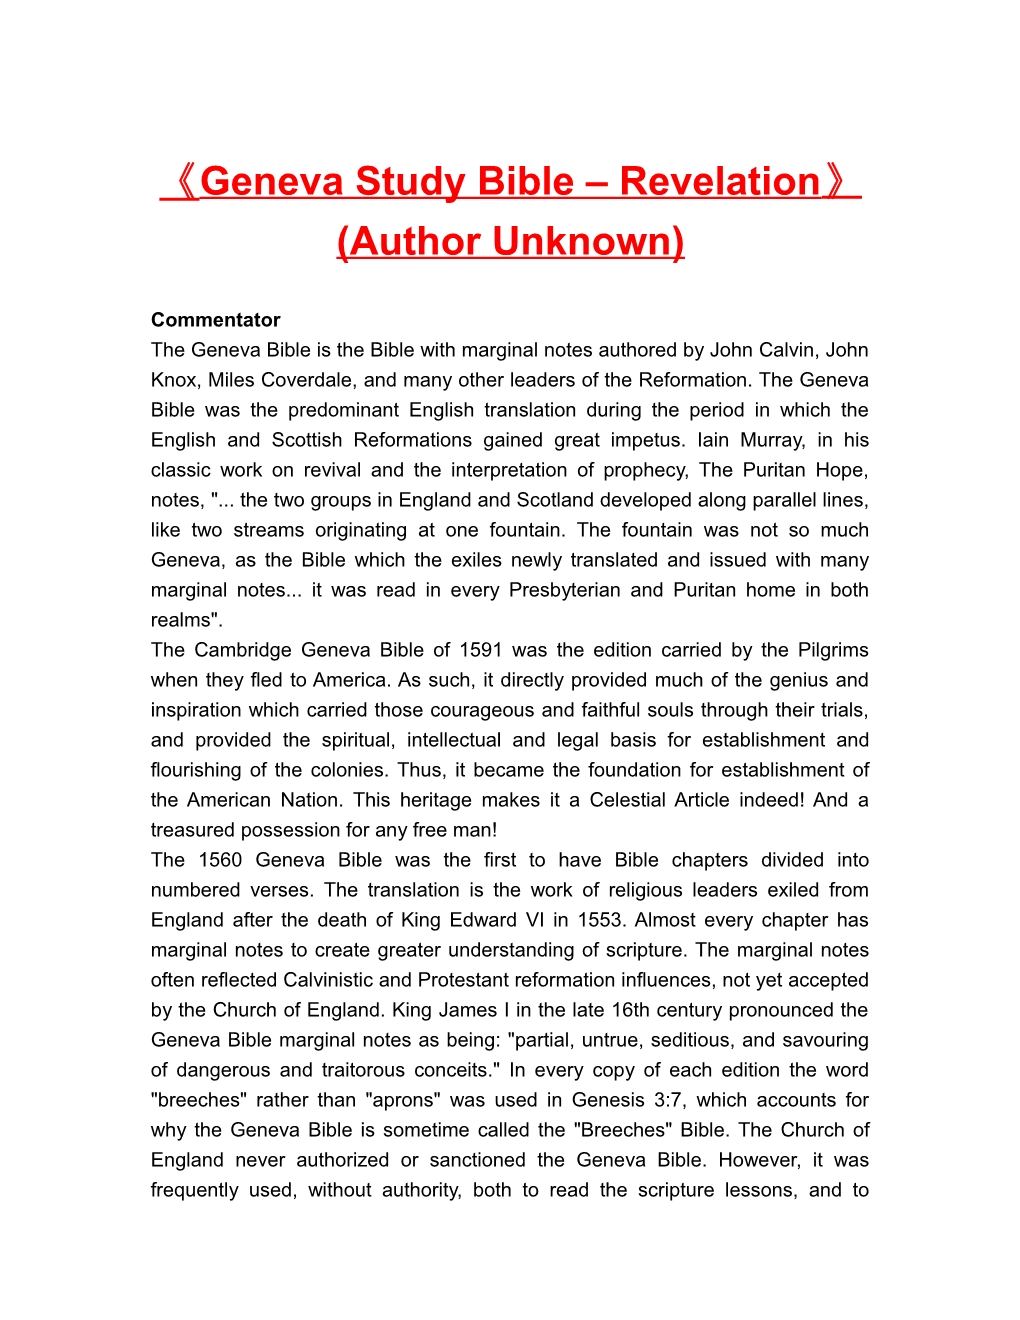 Geneva Study Bible Revelation (Author Unknown)